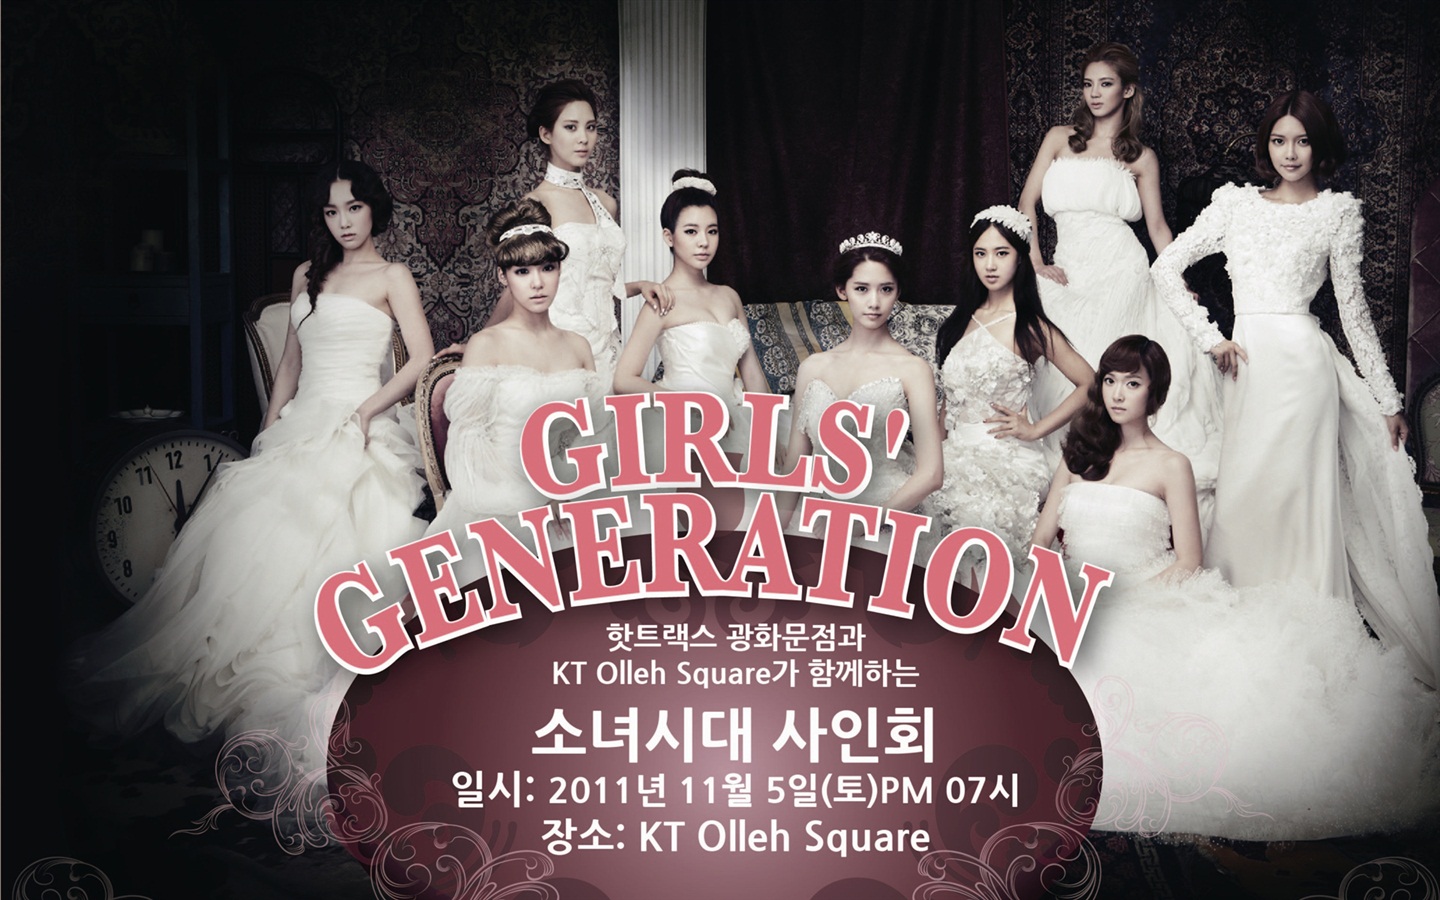 Generation Girls HD wallpapers dernière collection #8 - 1440x900